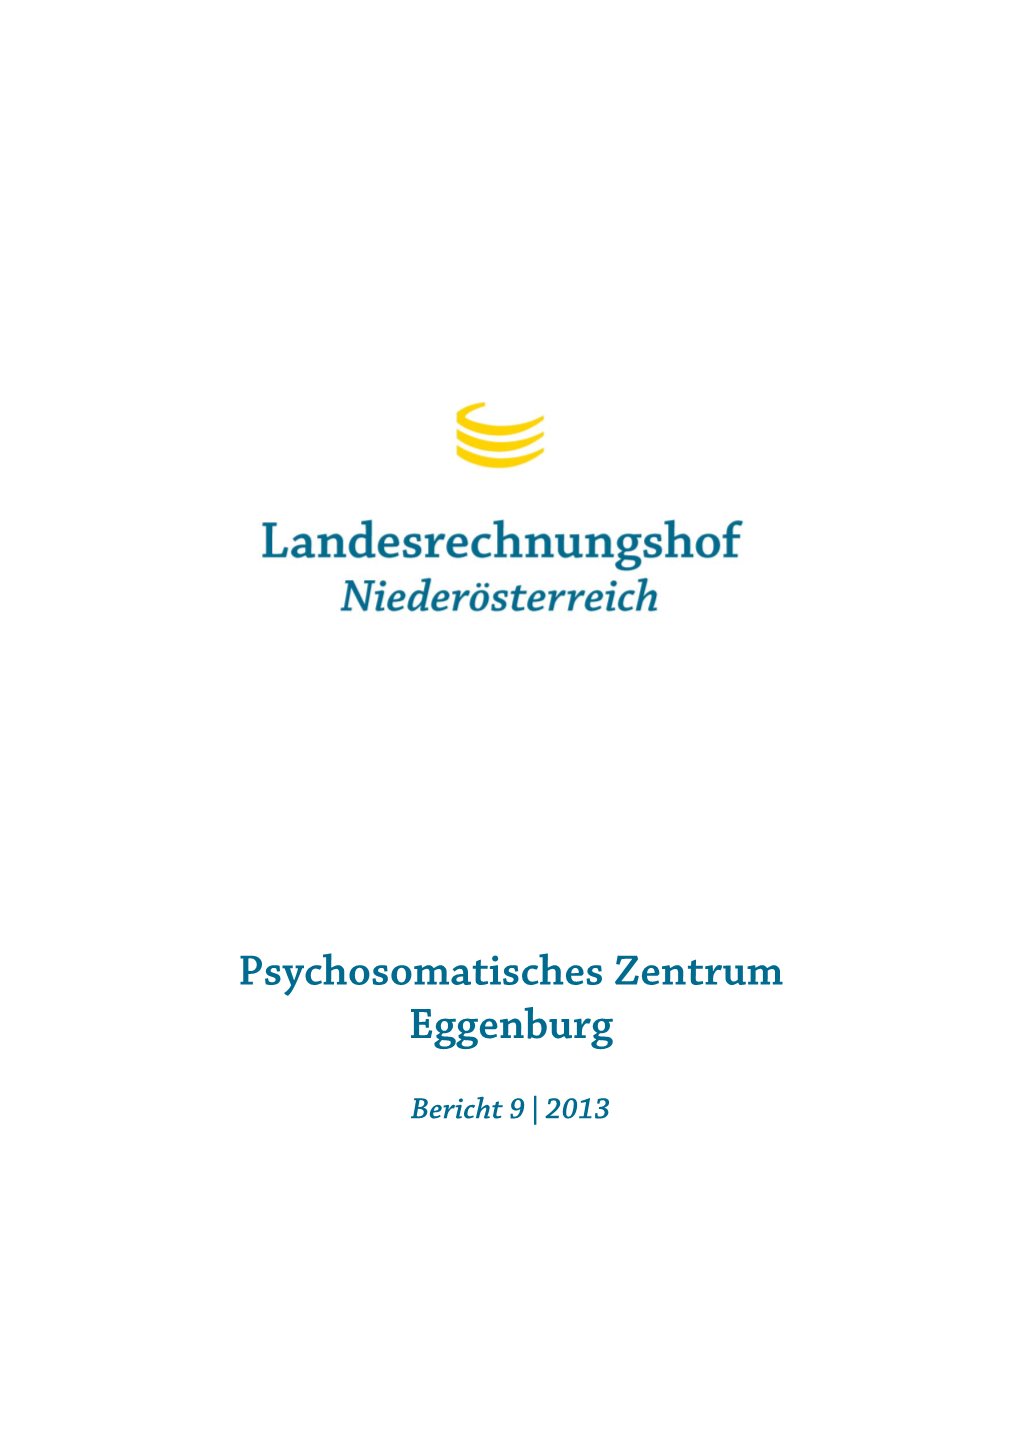 9/2013 „Psychosomatisches Zentrum Eggenburg